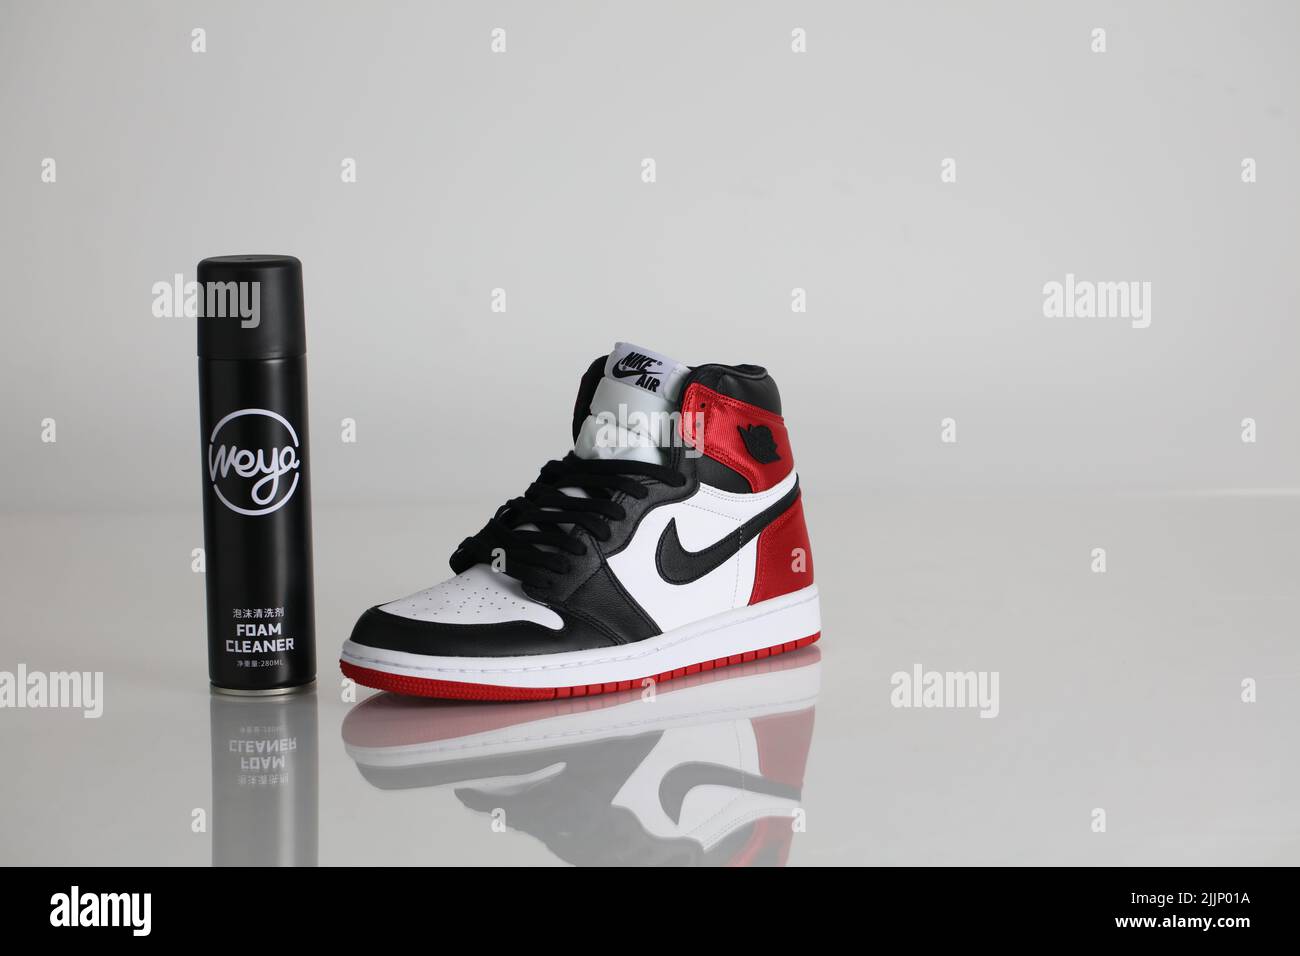 Air jordan sneaker hi-res stock photography and images - Alamy